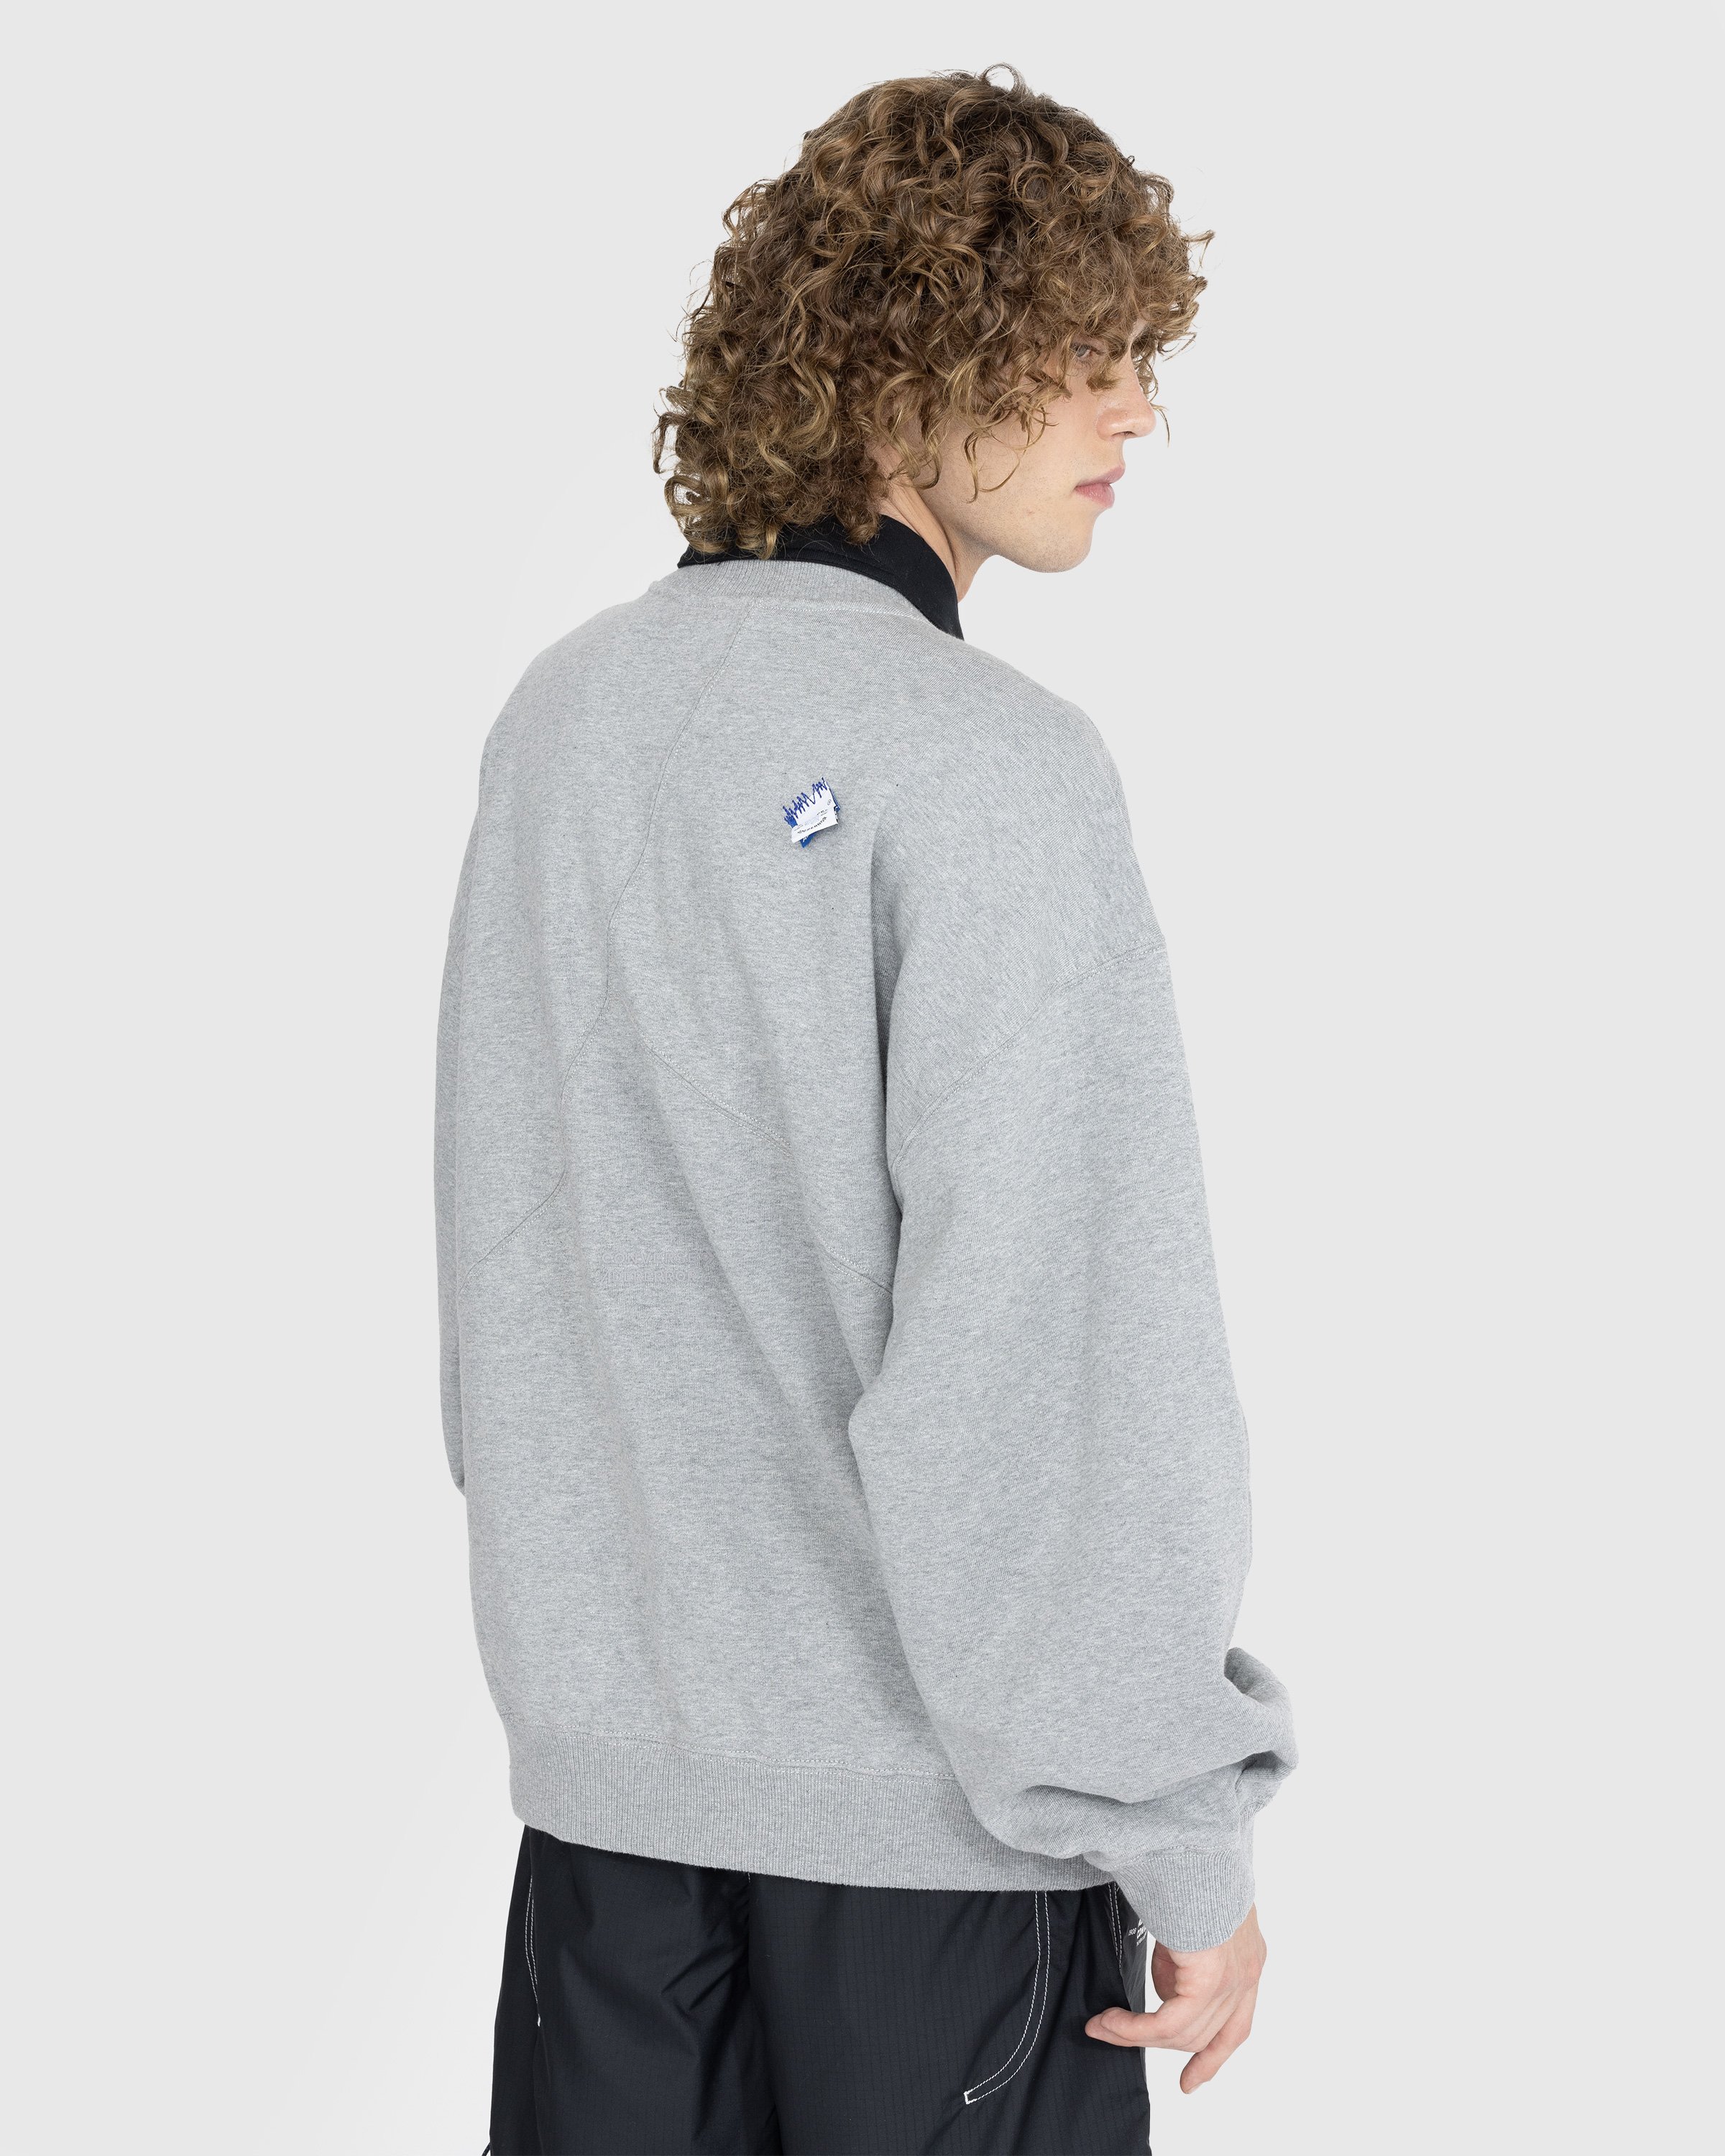 Converse x Ader Error - Shapes Crew Sweatshirt Vintage Grey Heather - Clothing - Grey - Image 3